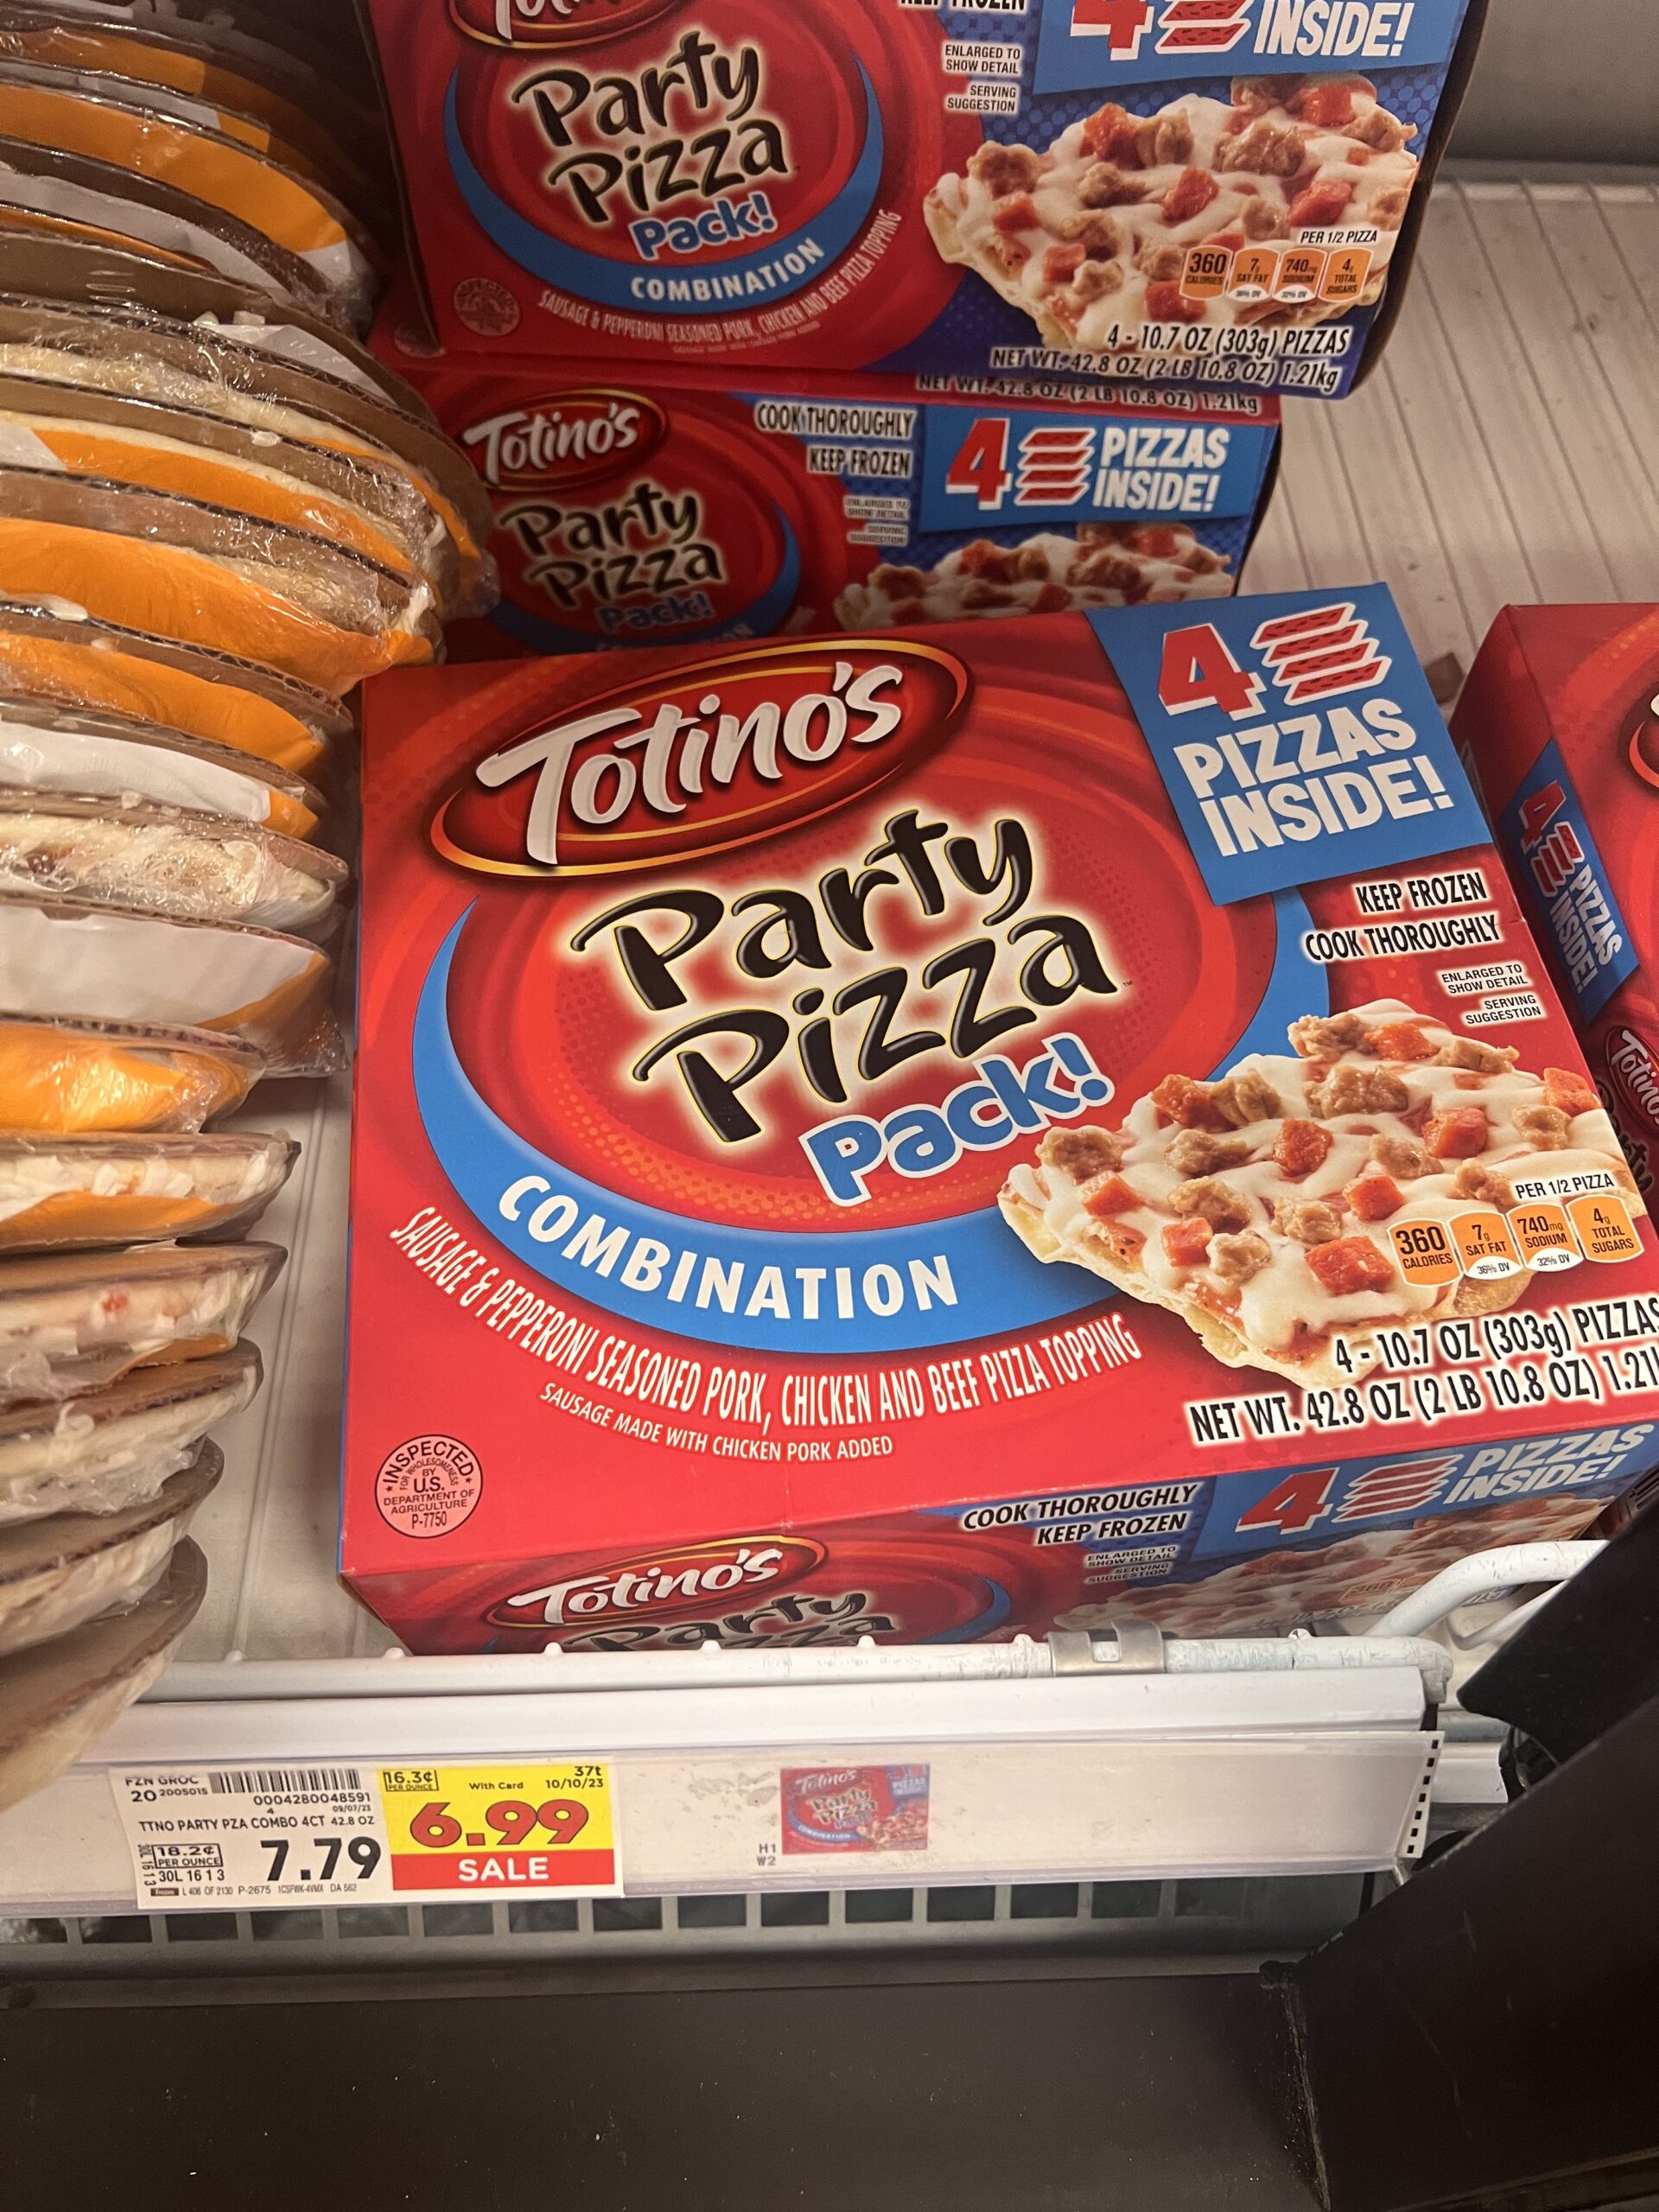 totinos pizza kroger shelf image 2